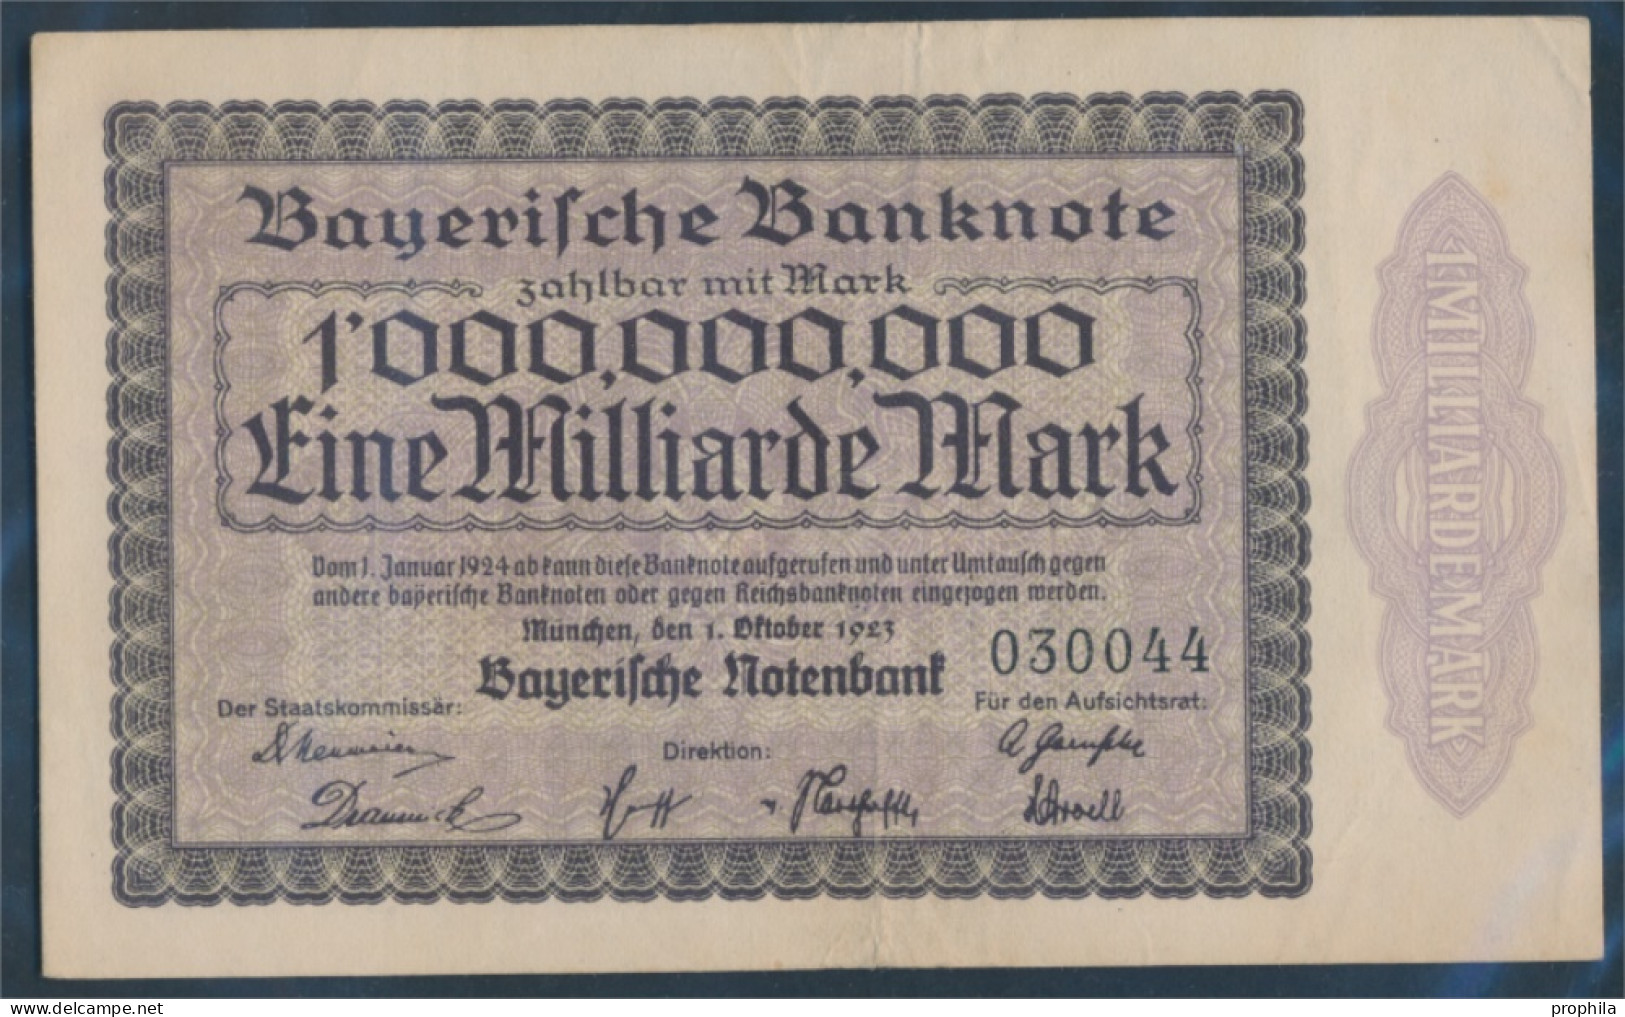 Bayern Rosenbg: BAY17 Länderbanknote Bayern Gebraucht (III) 1923 1 Mrd. Mark (10288406 - 1 Milliarde Mark